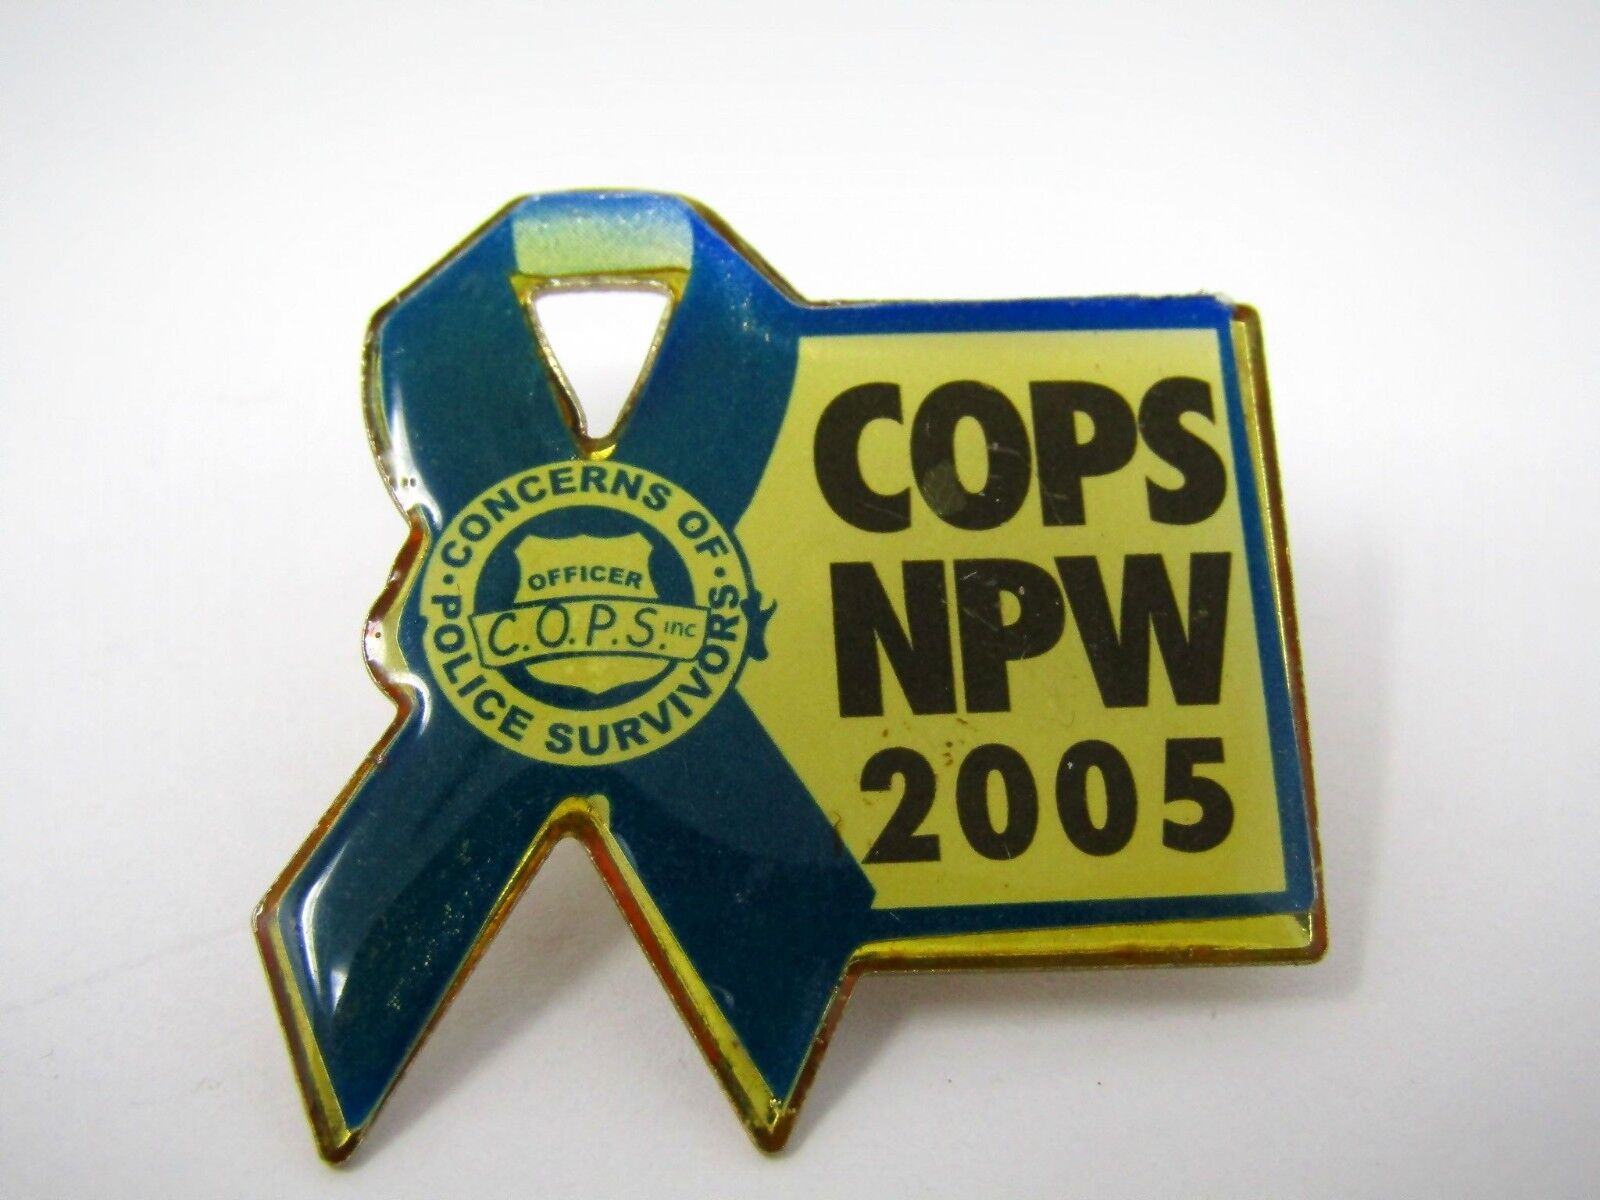 Collectible Pin: 2005 COPS NPW Concerns of Police Survivors Blue Ribbon